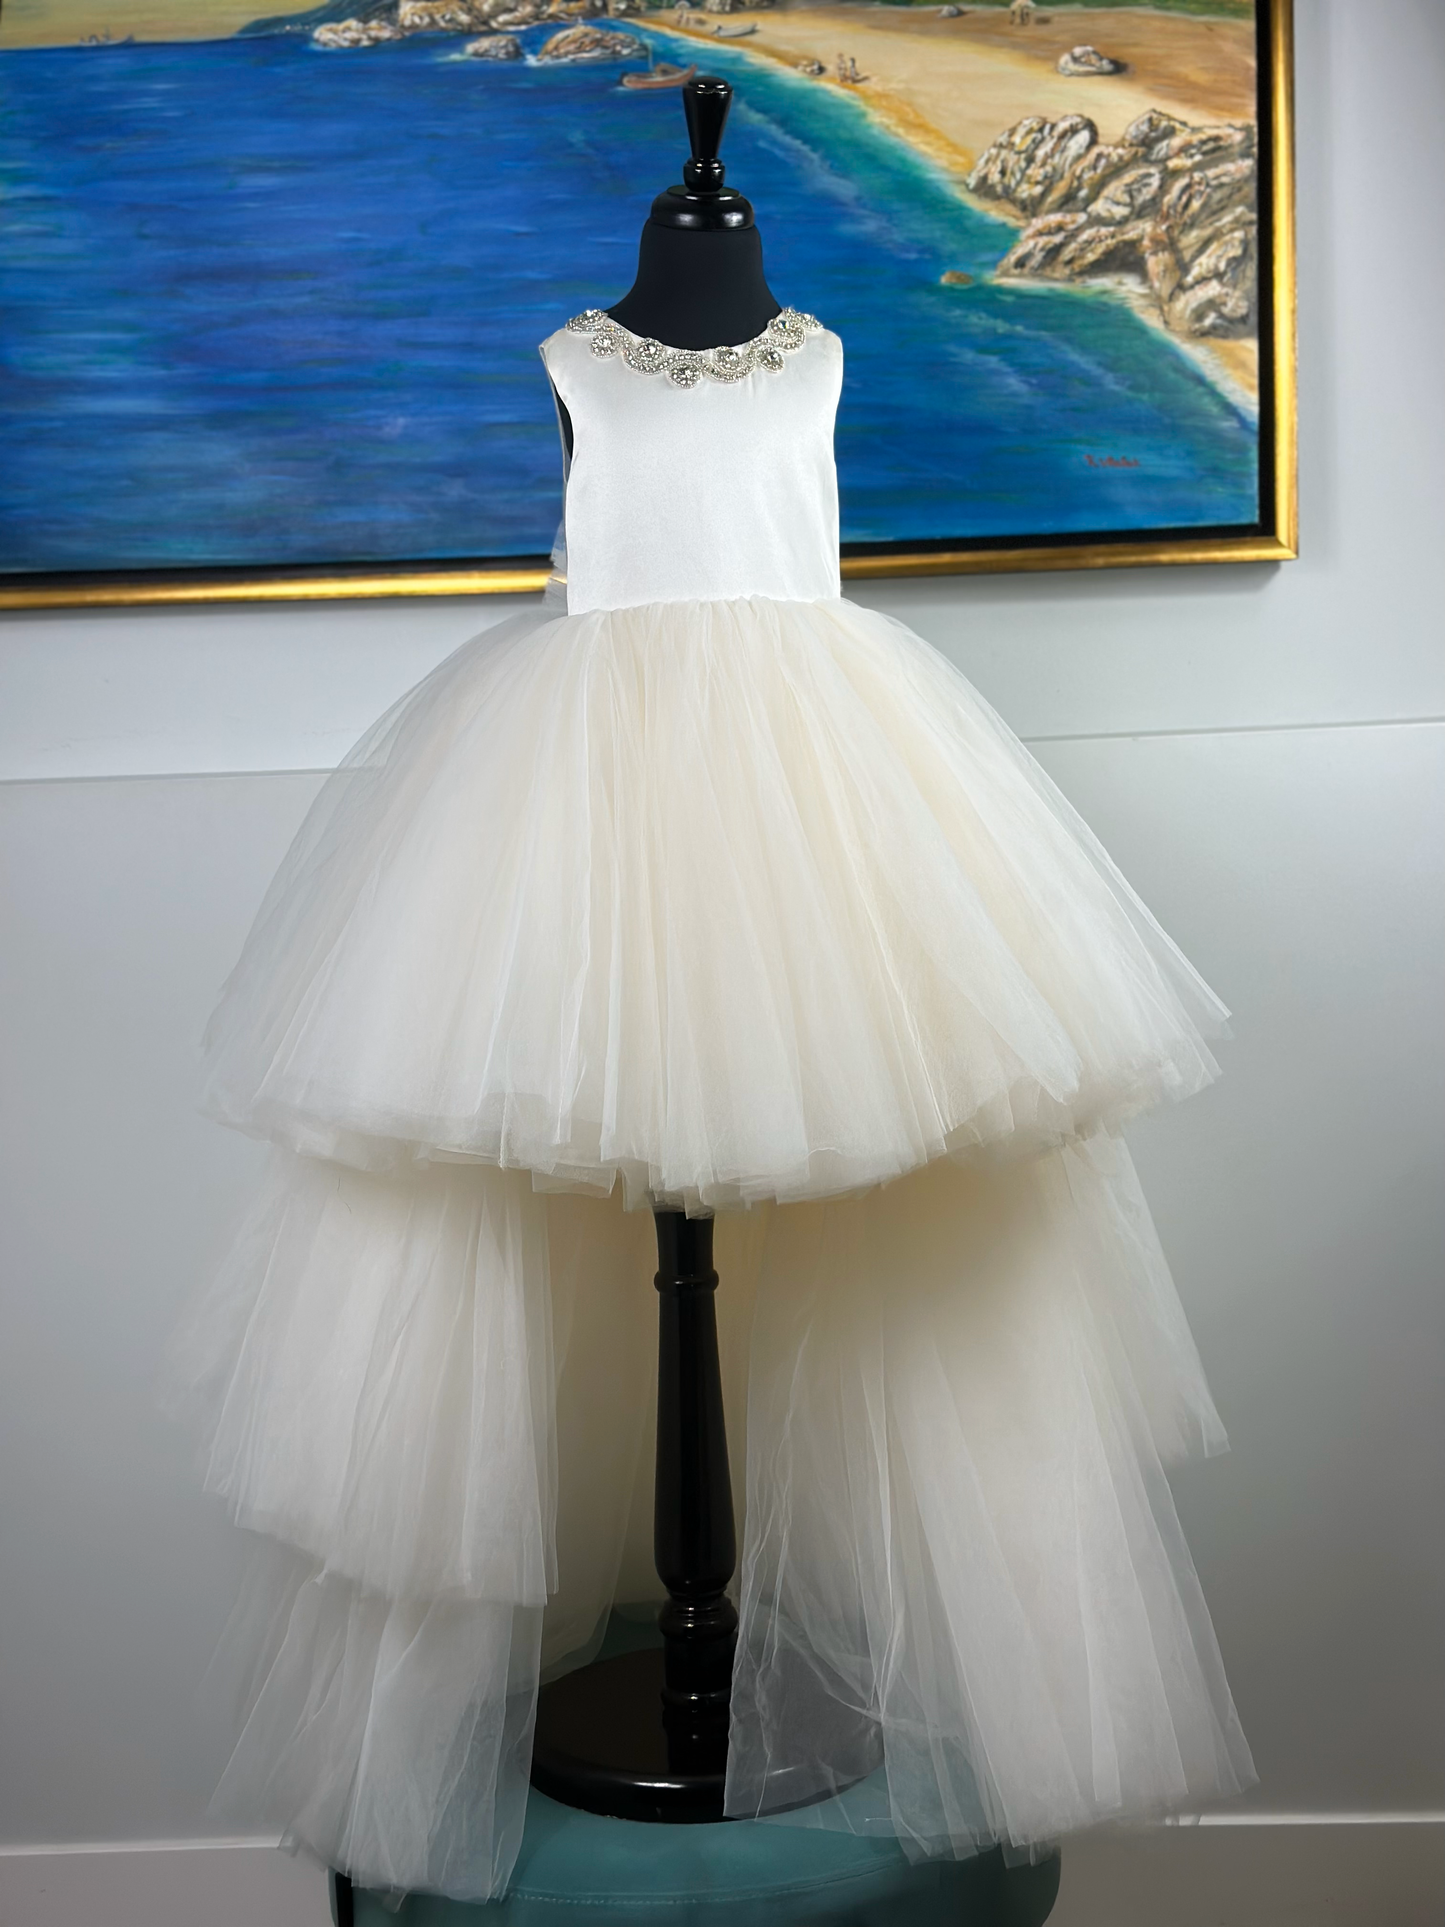 Saint Tropez High-Low Dress